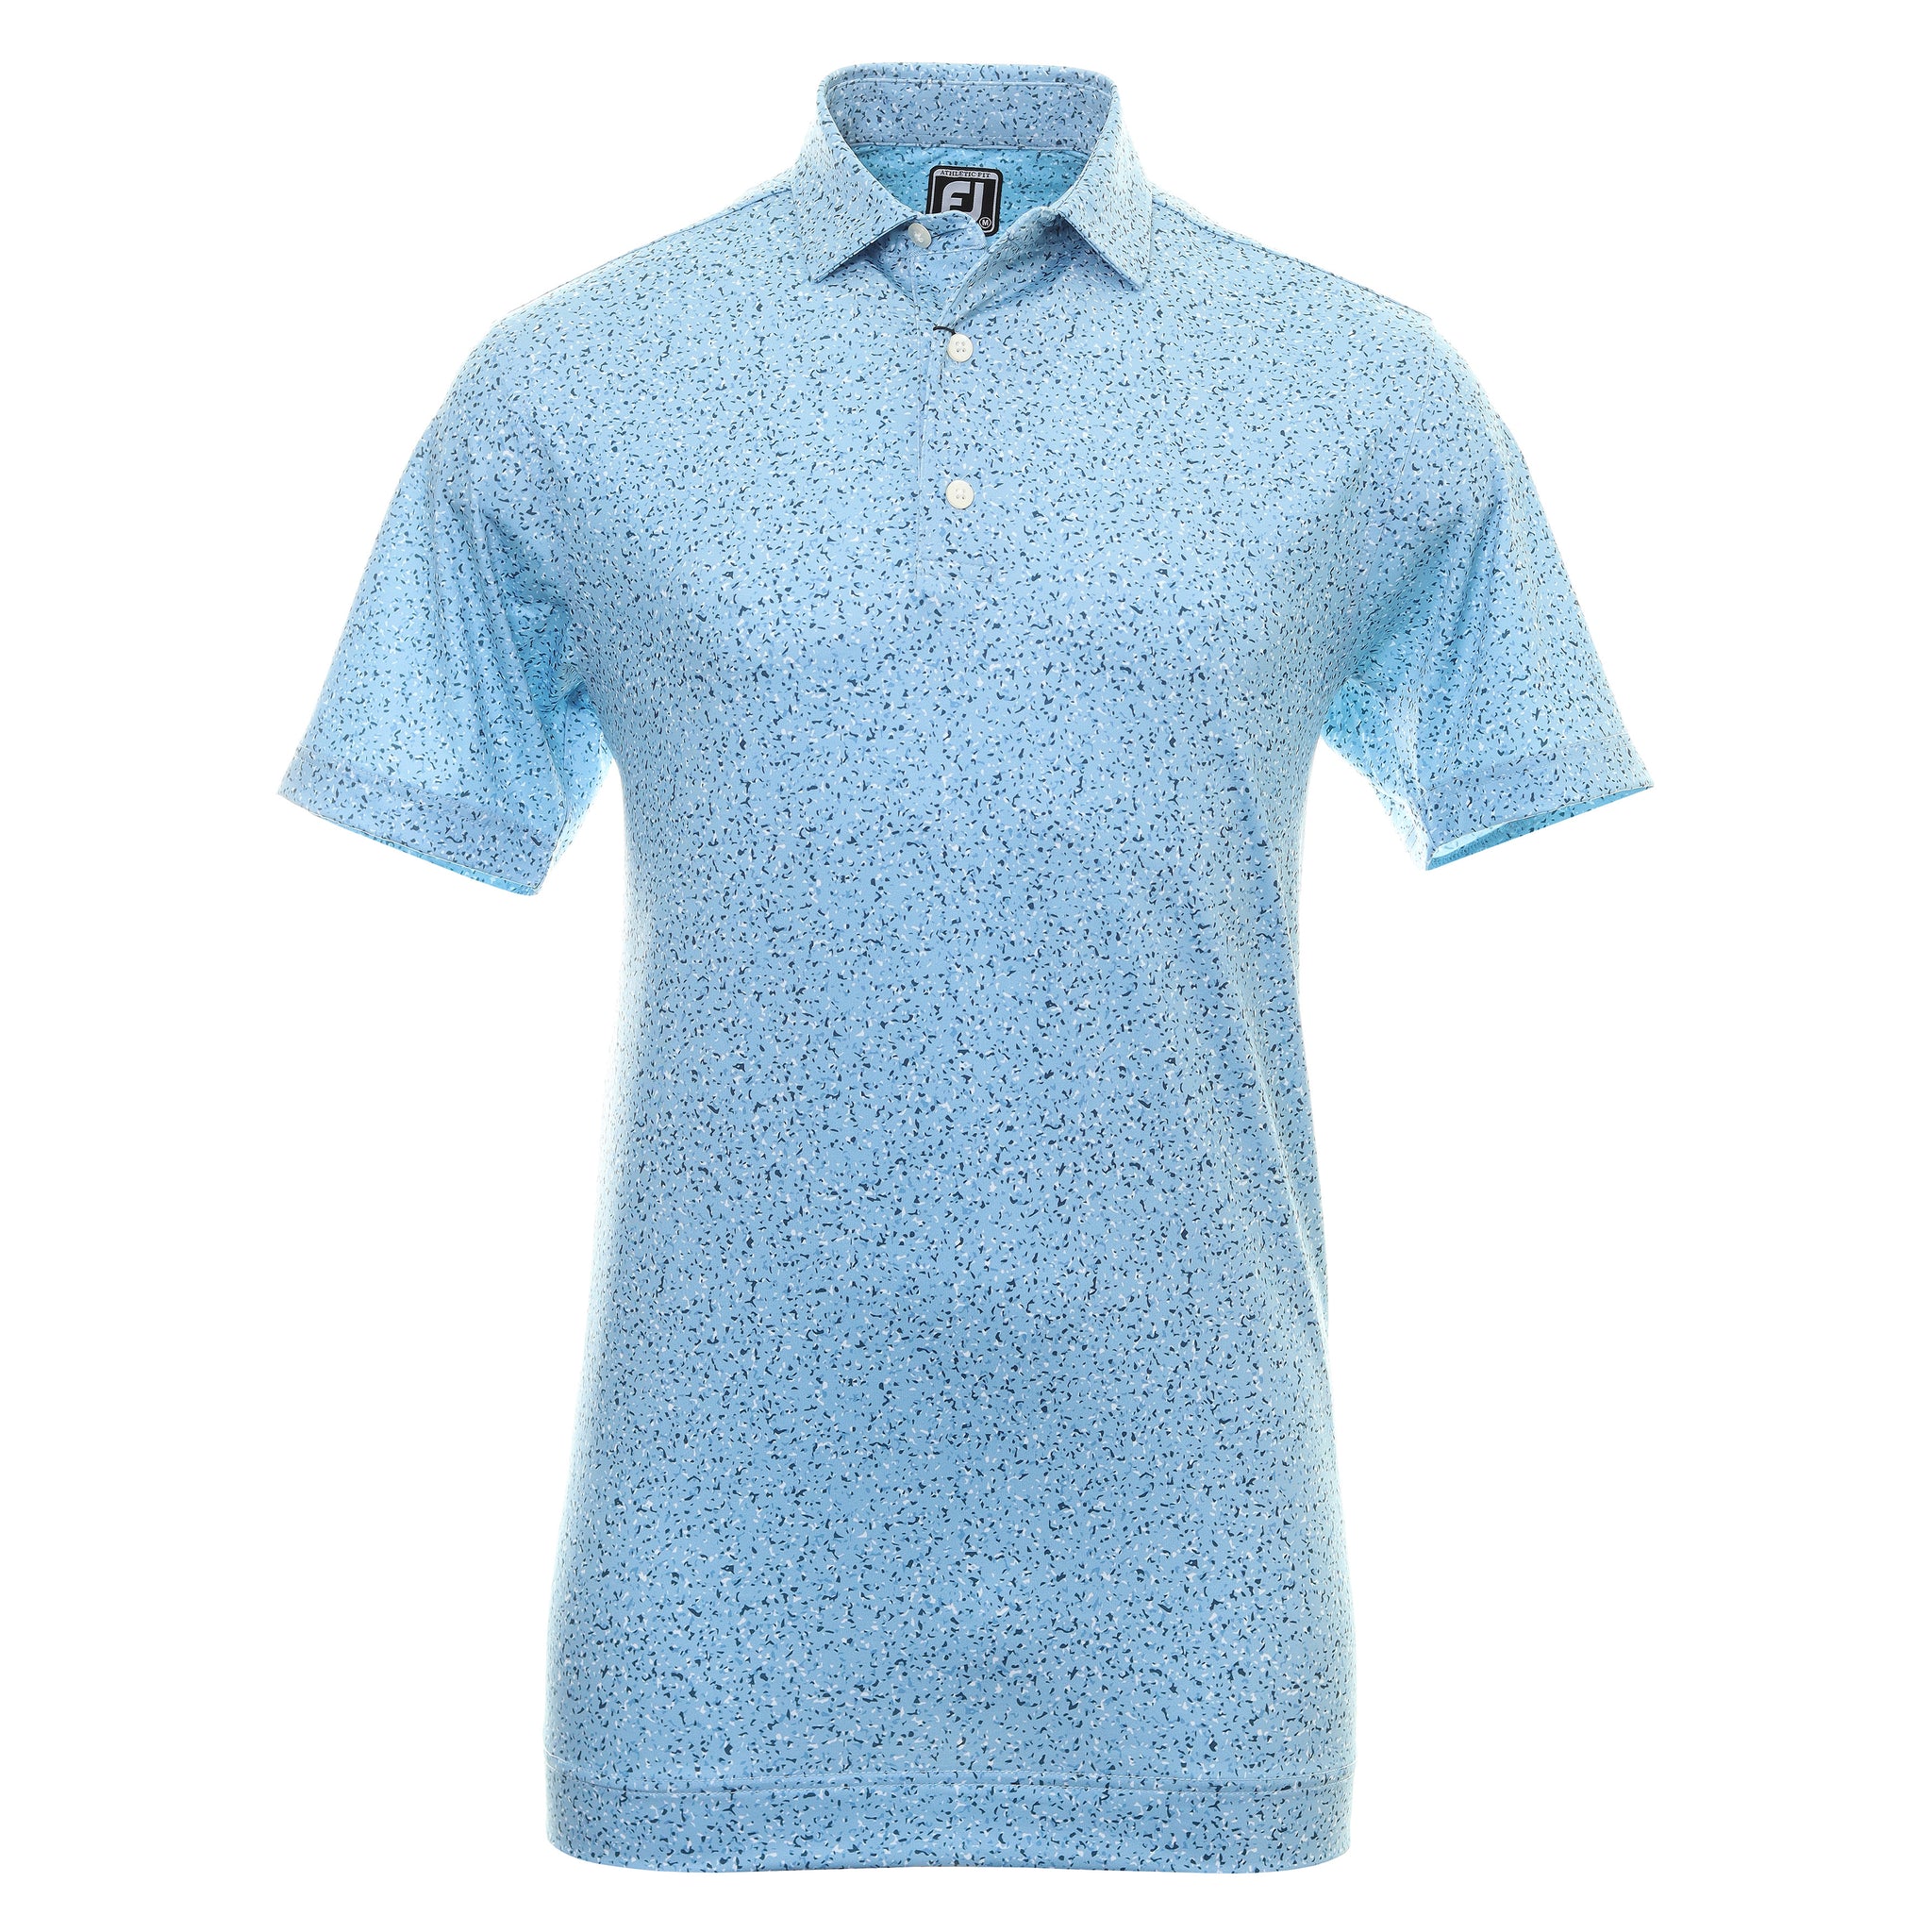 FootJoy Granite Print Golf Shirt 88417 Dusk Blue | Function18 ...